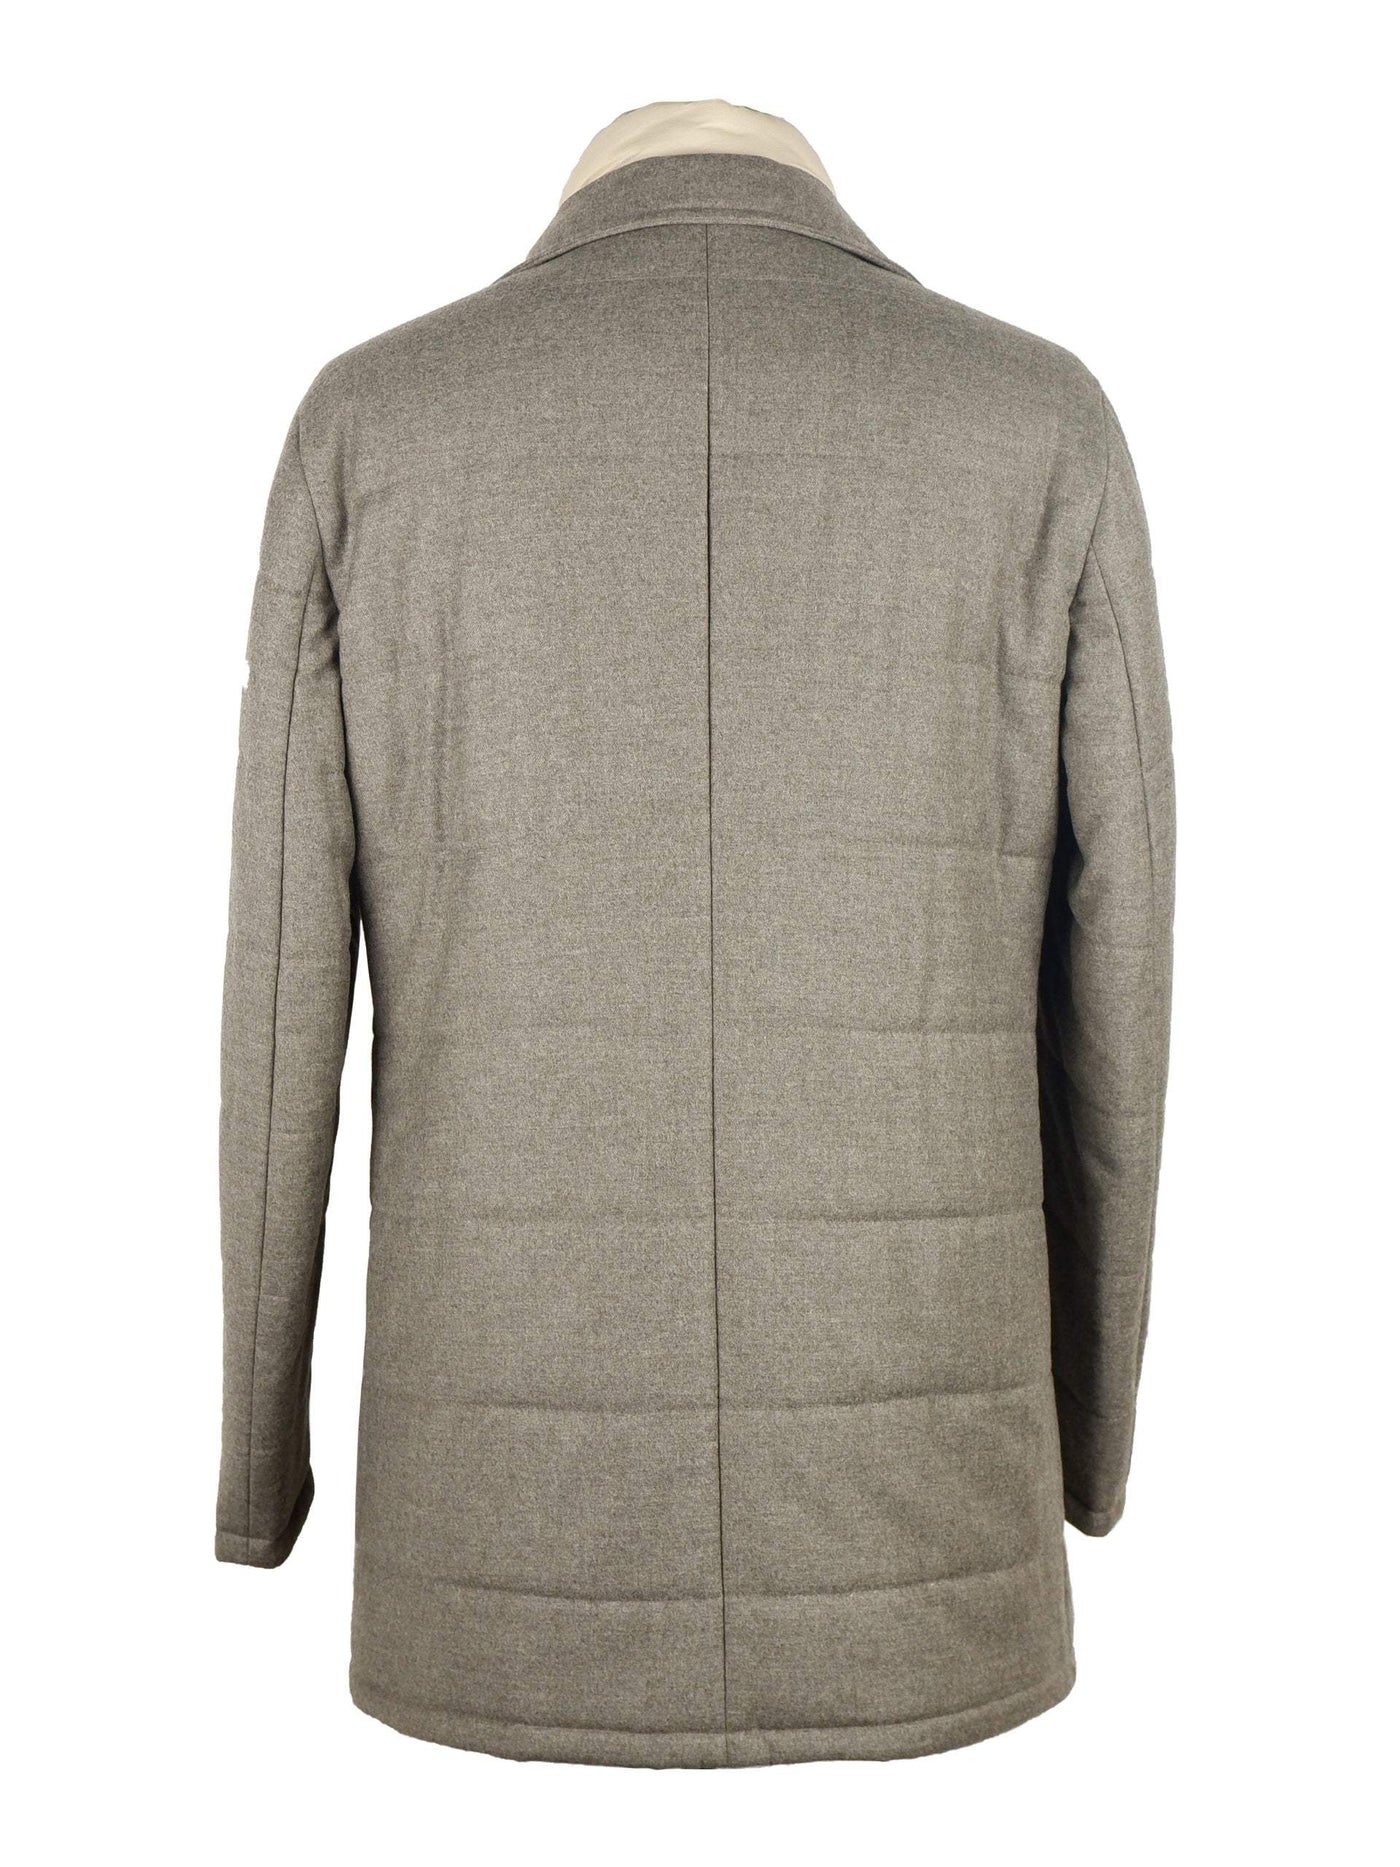 Made in Italy Gray Wool Jacket #men, feed-1, Gray, IT46 | S, IT48 | M, IT50 | L, IT52 | XL, IT54 | XXL, IT56 | 3XL, IT58 | 3XL, Jackets - Men - Clothing, Made in Italy at SEYMAYKA